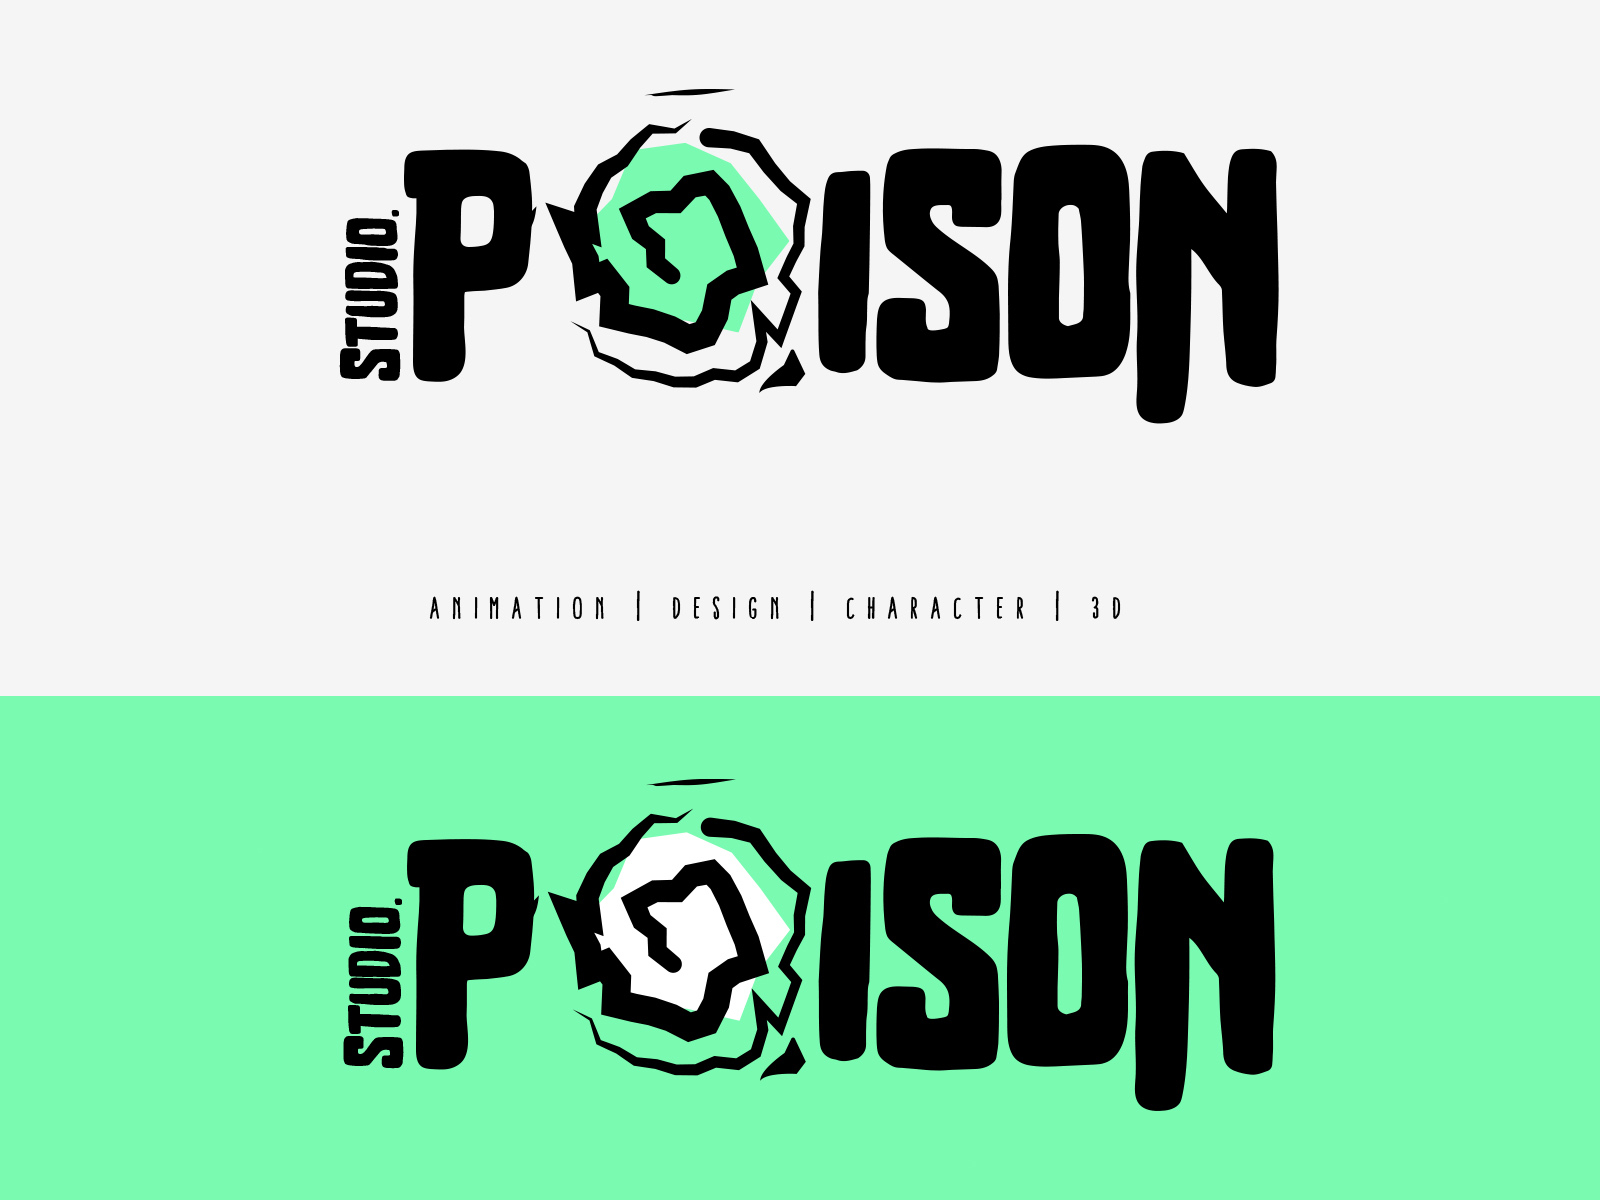 Studio Poison Logo Design By Daniel Allegretti On Dribbble